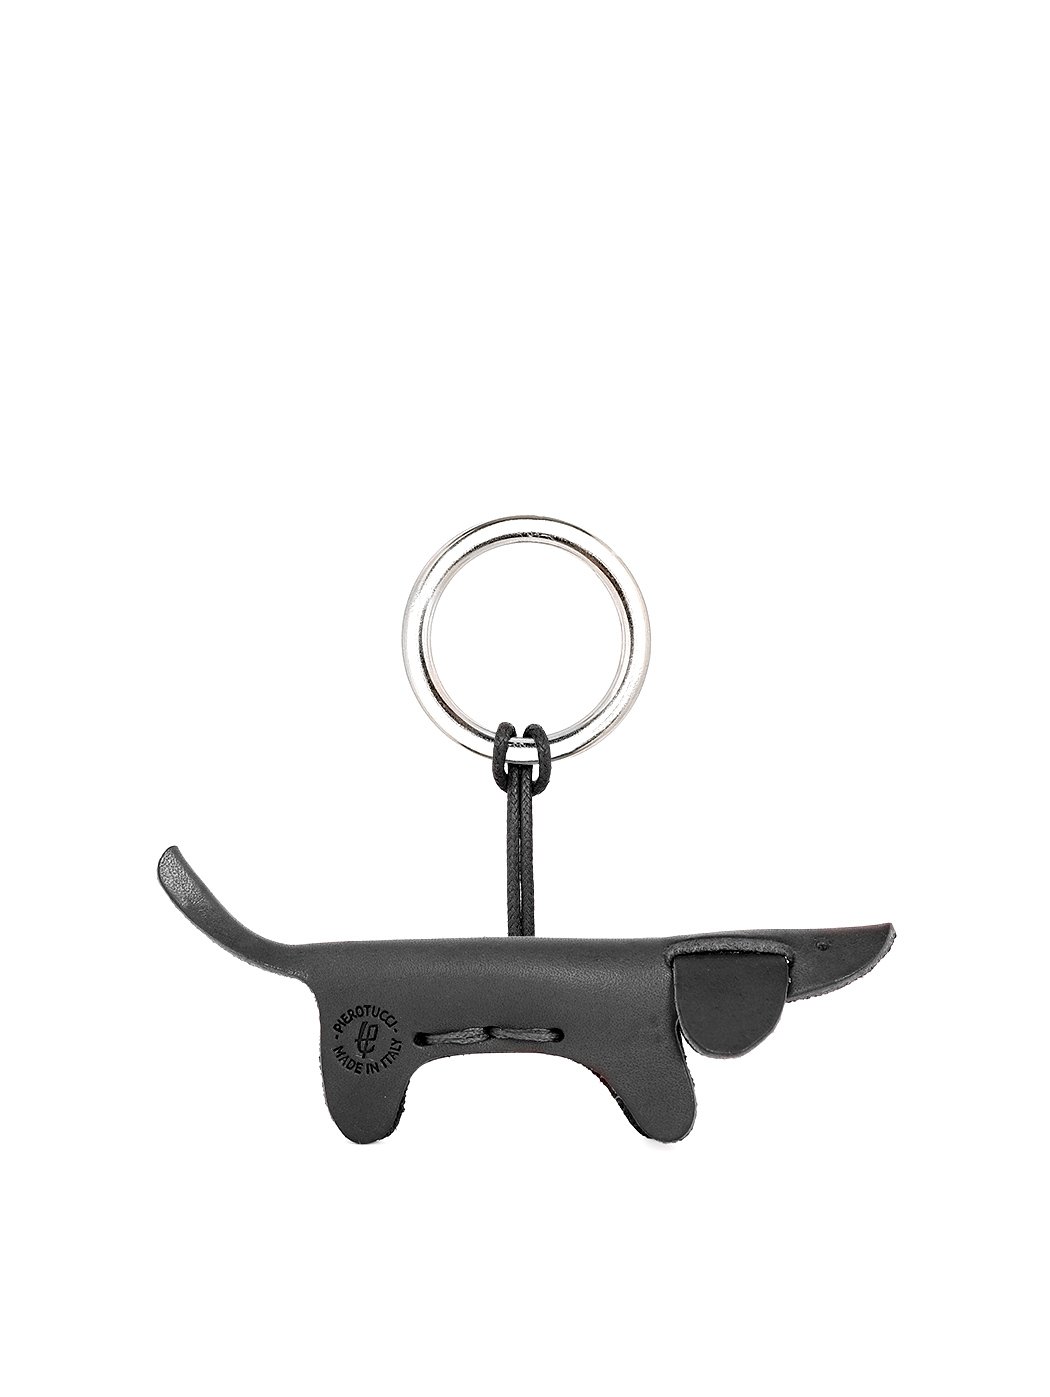 Key Holder Leather Dog Keychain Ring Cool Cute Pet Dog Keyring Bag